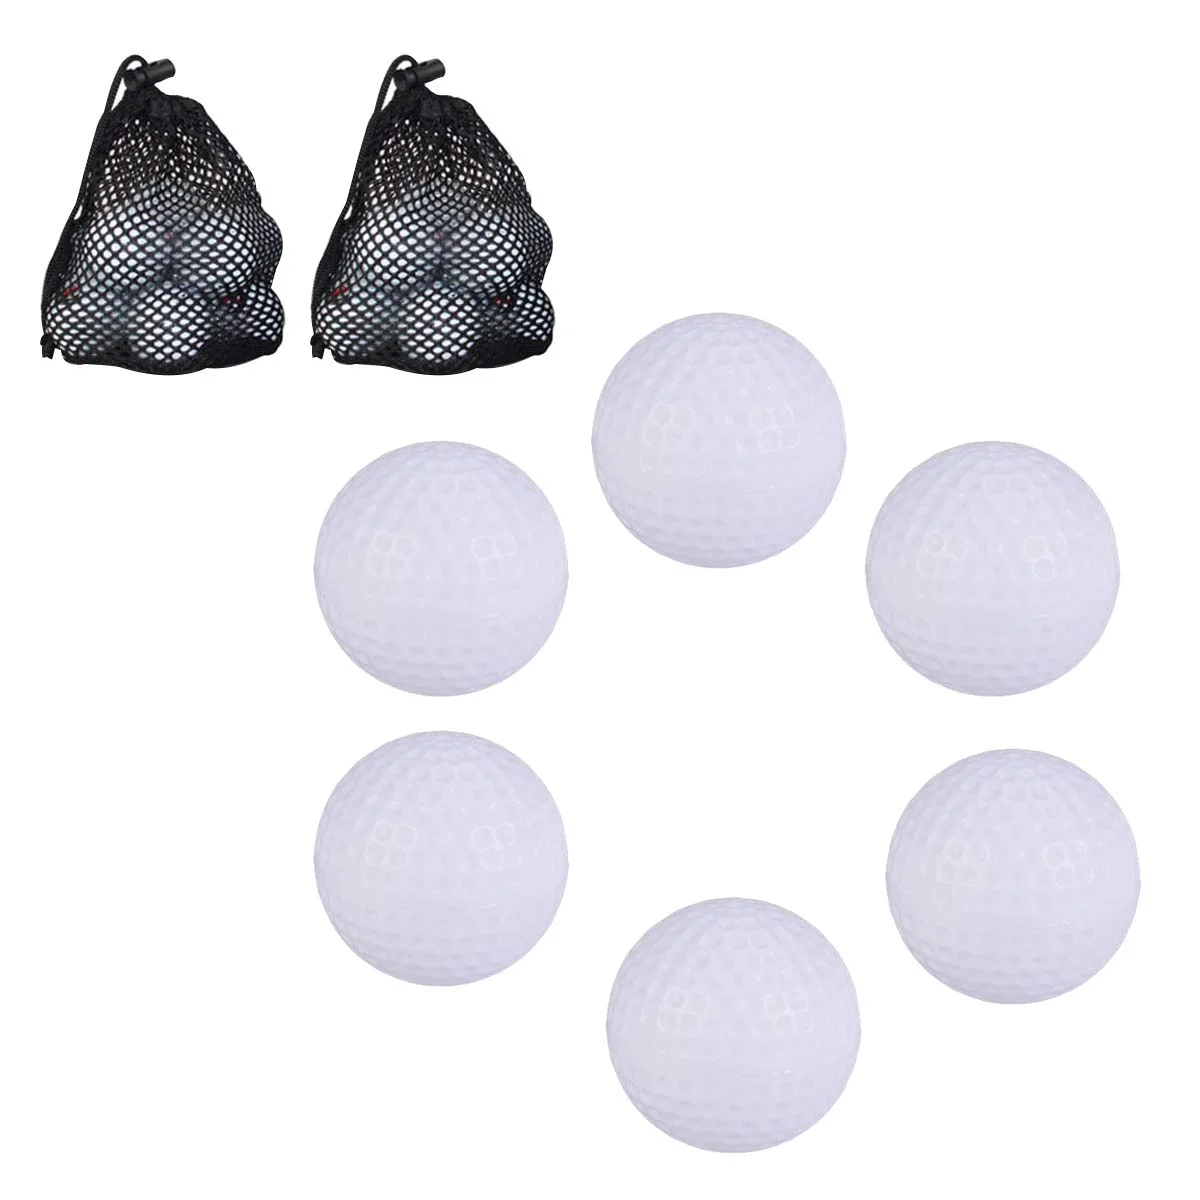 

74 in 1 Plastic Balls Kit Useful White Practical Outdoor Training Golfballs Practice Training Aids for Children Kids Golfer